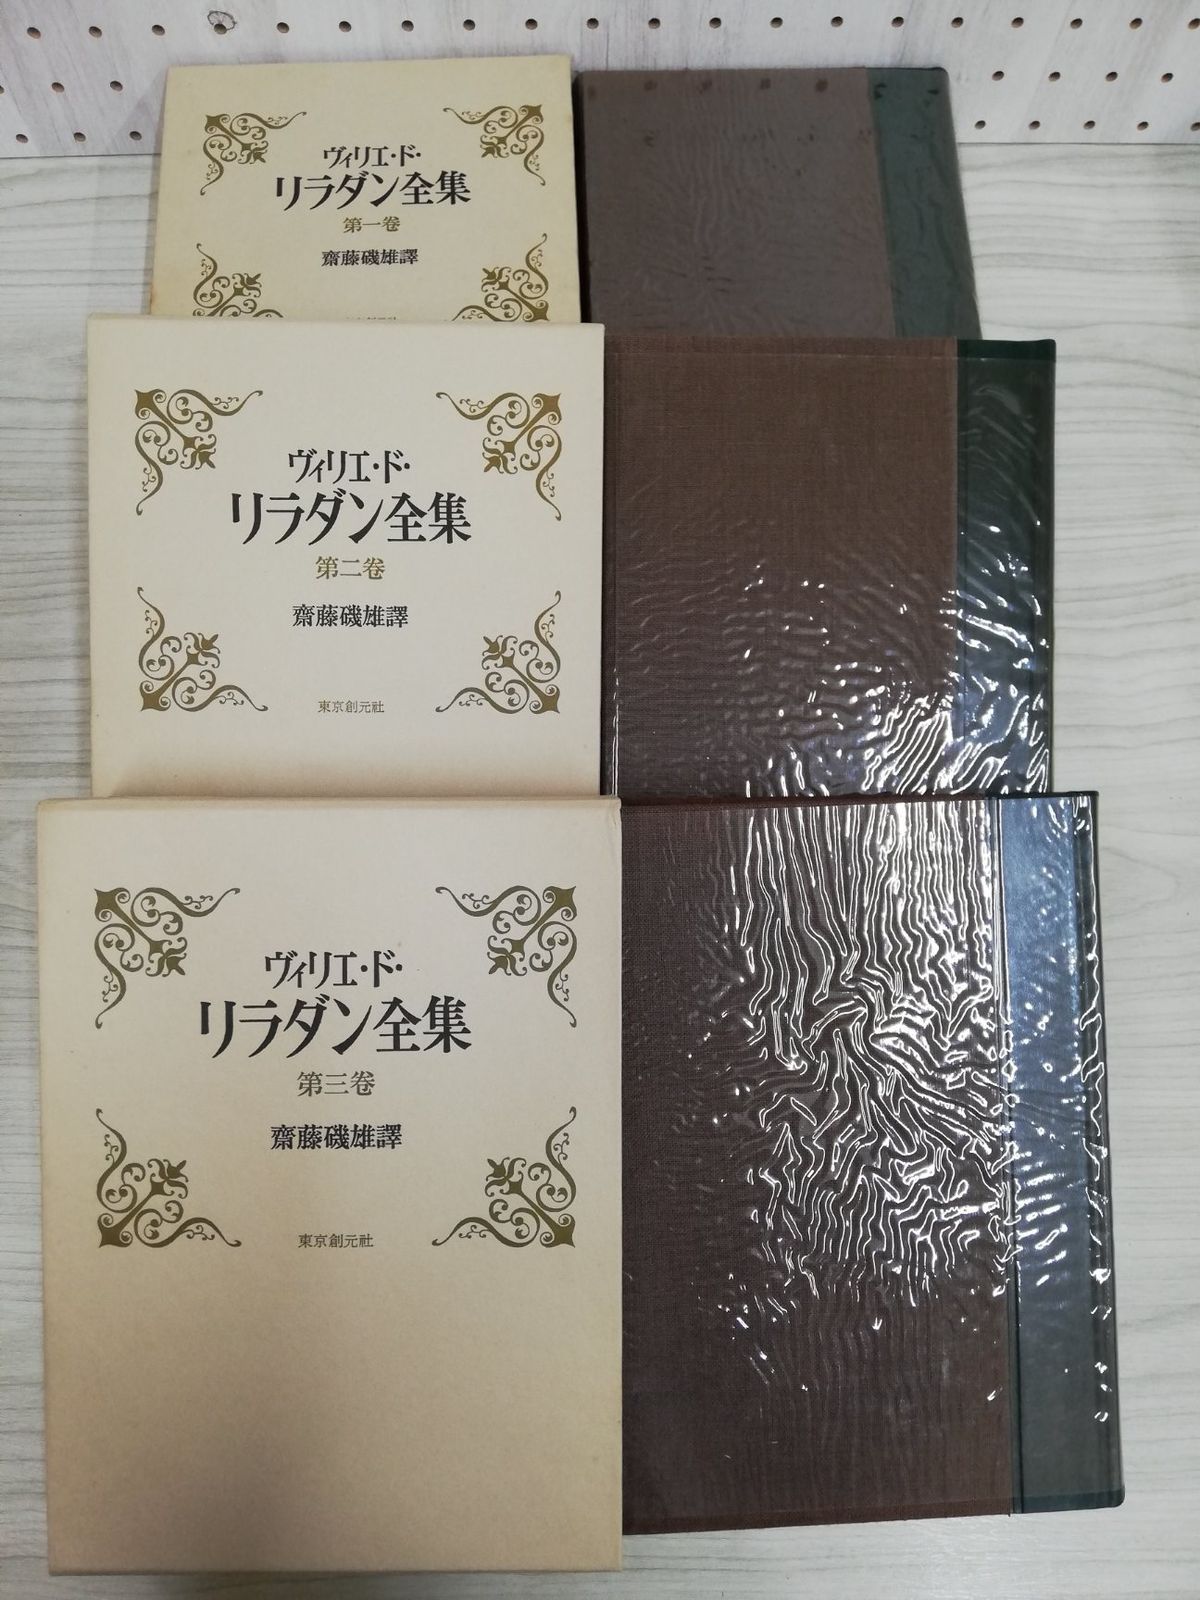 リラダン全集 全五巻 1500部限定版 昭和49年 - 通販 - mille-coeur.net